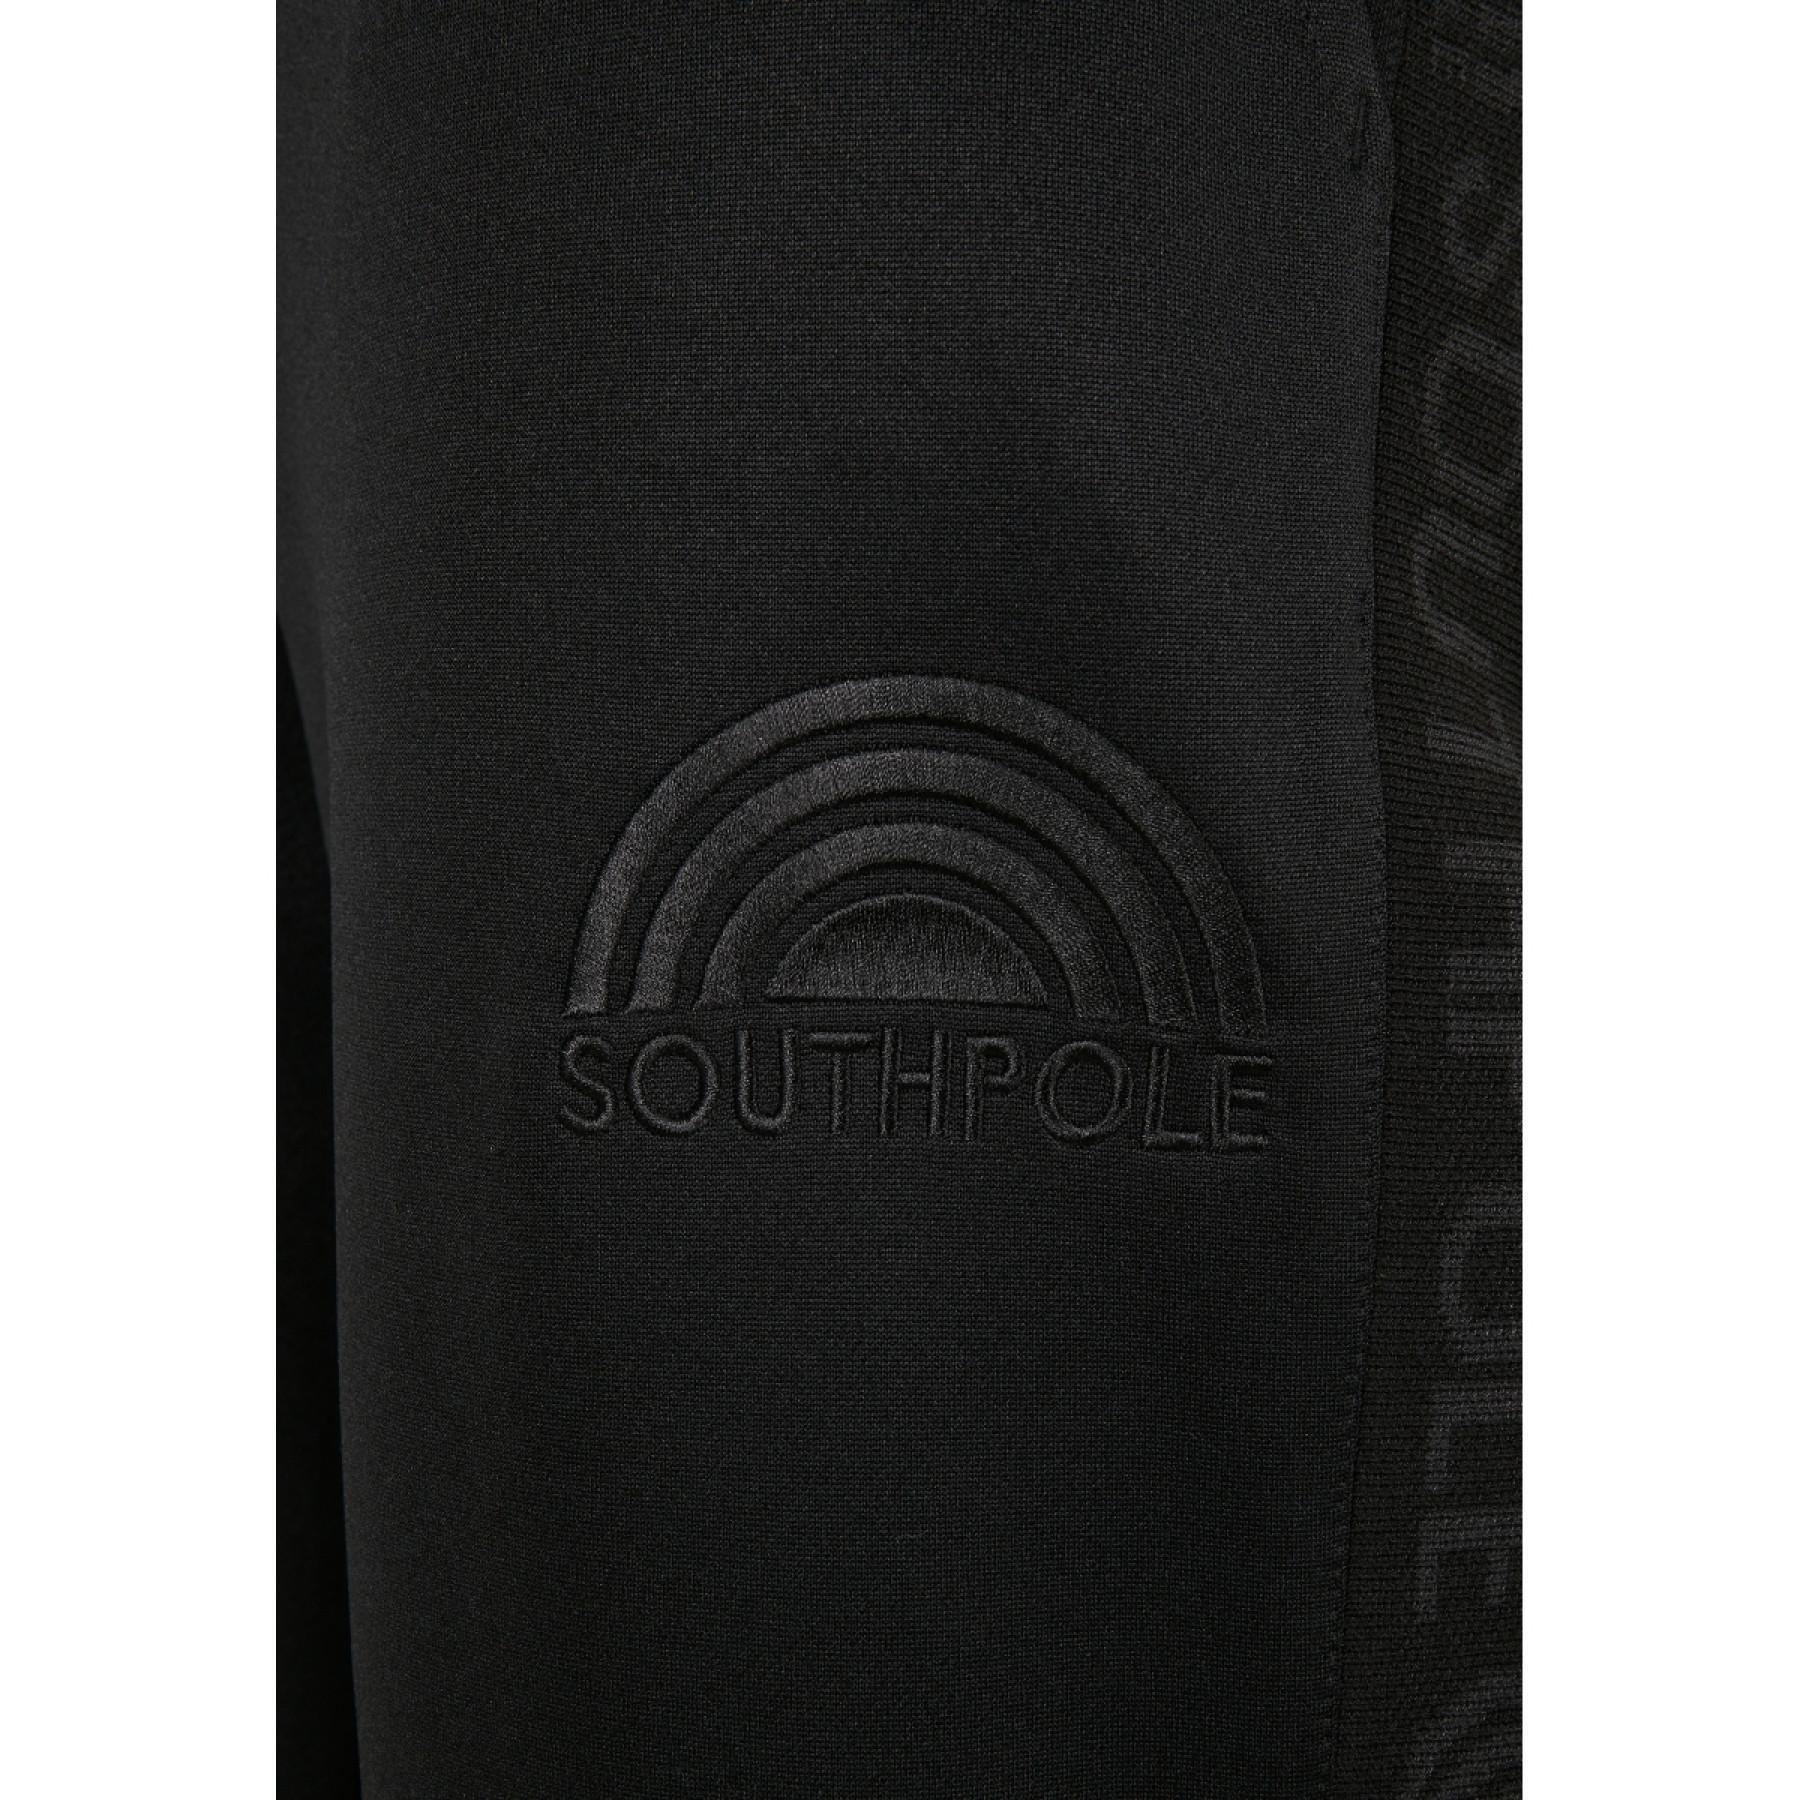 Spodnie Southpole tricot with tape